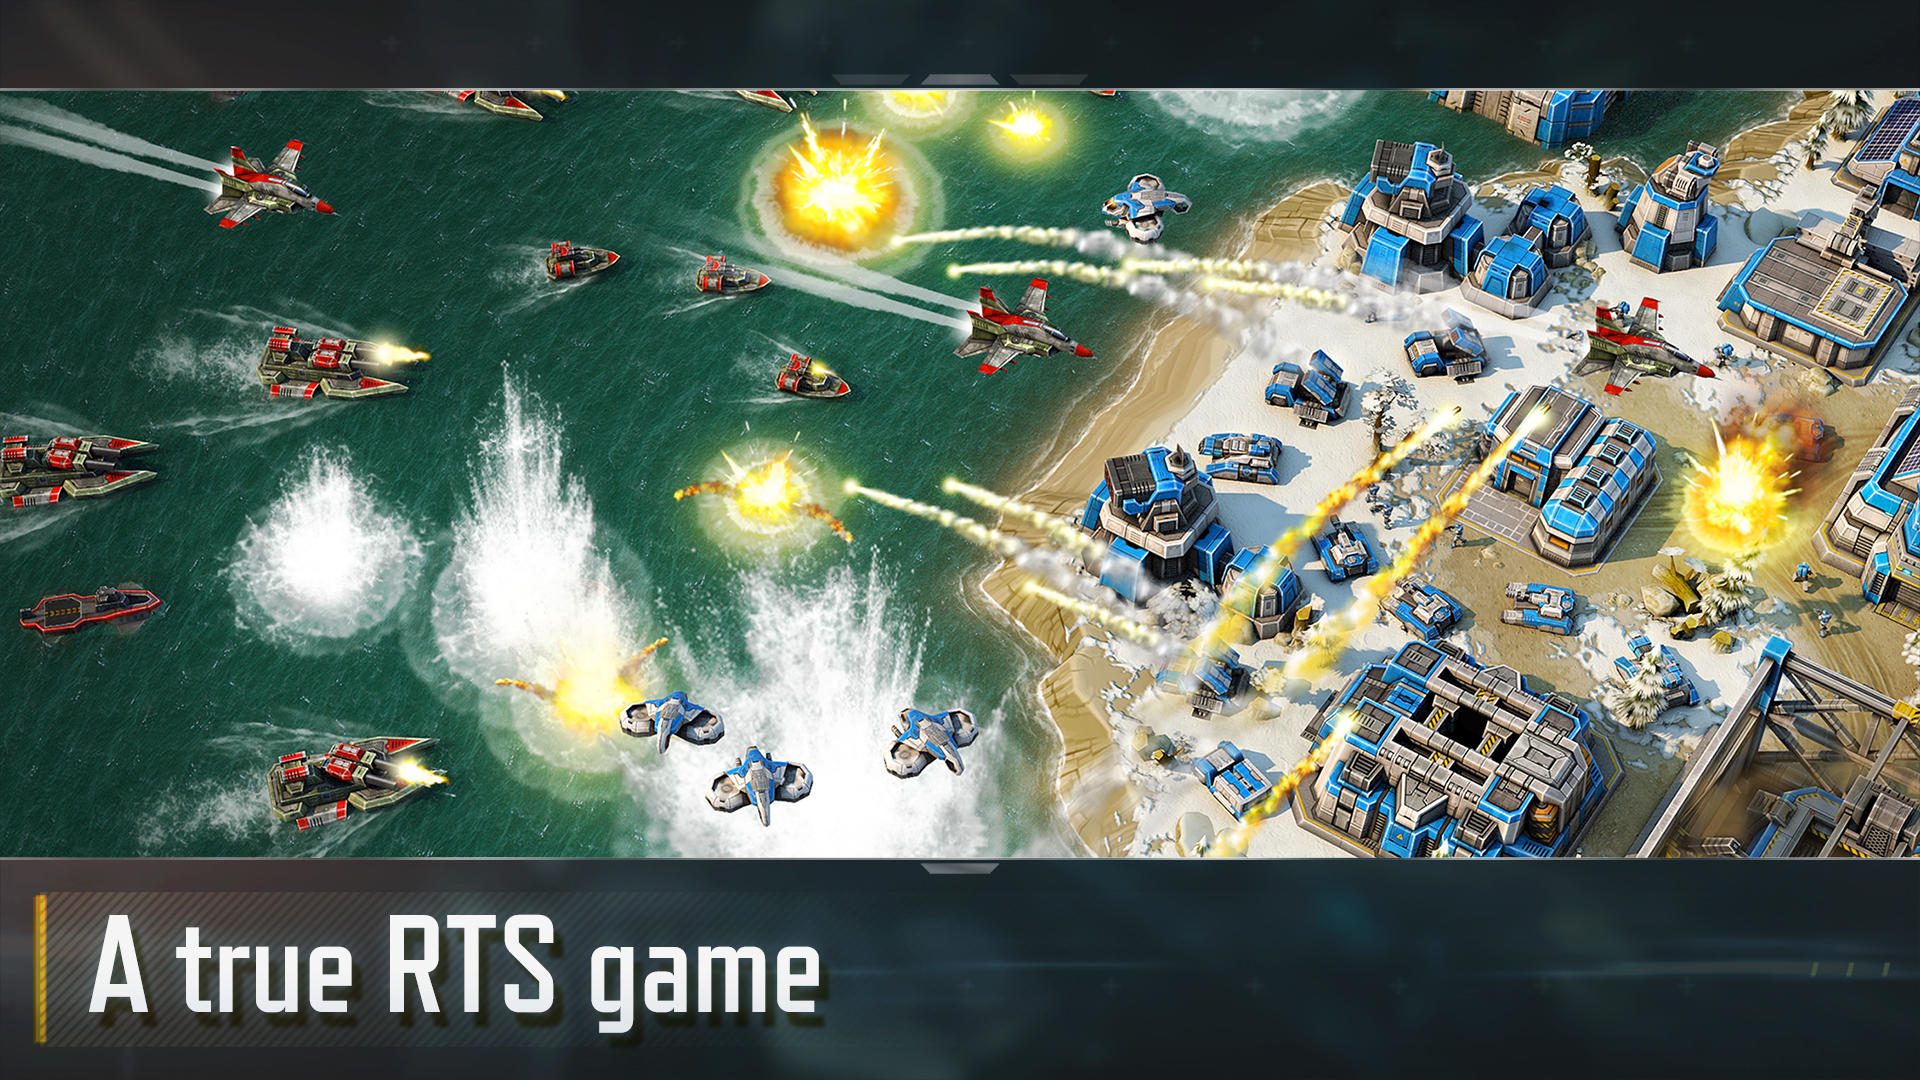 Screenshot 1 of Art of War 3: RTS strategy game 4.4.10